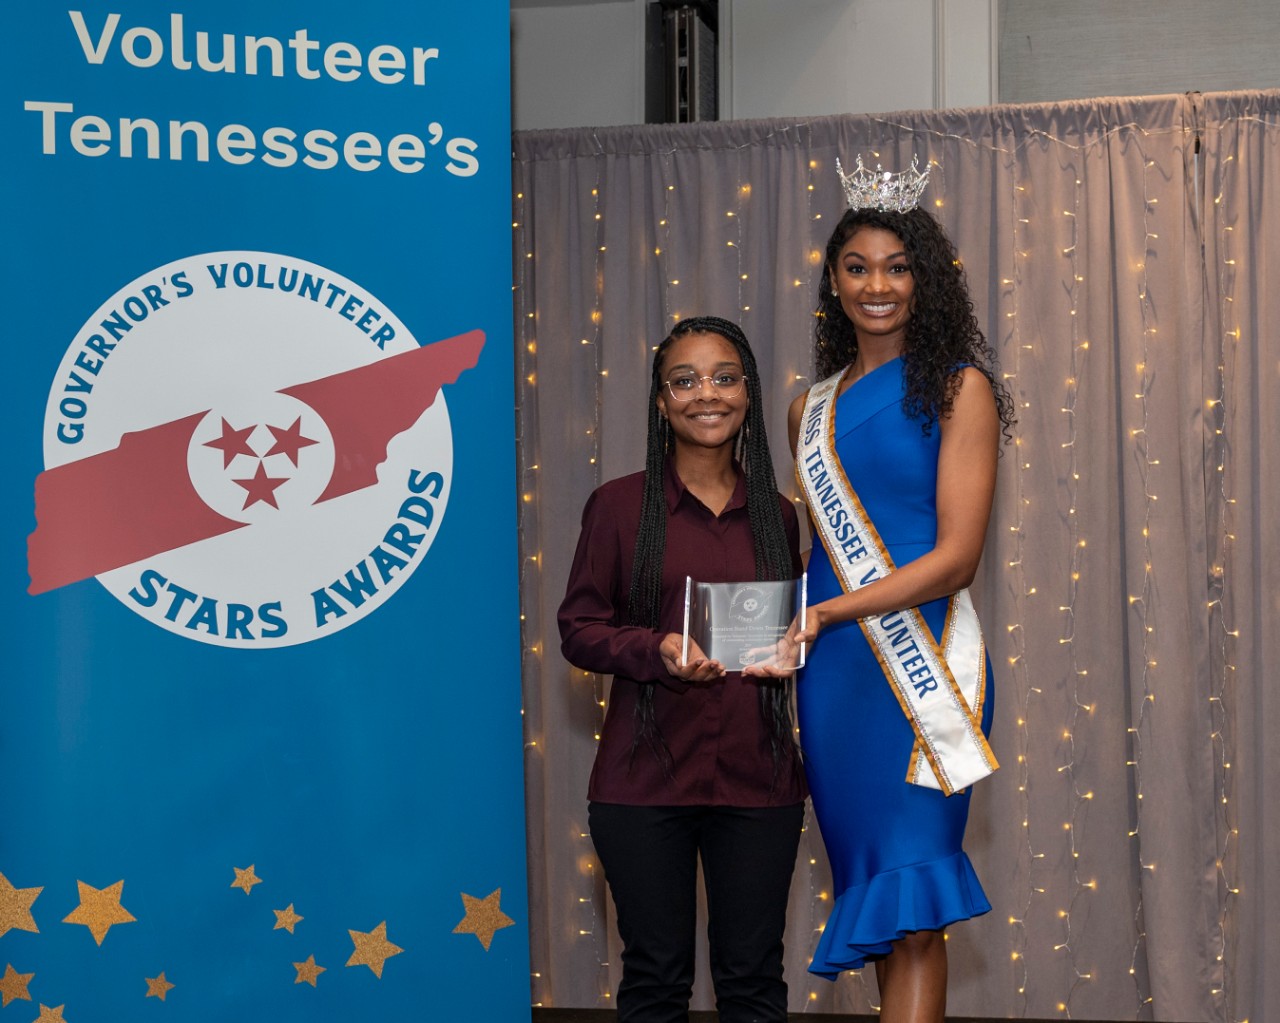 2/18/24 Governor's Volunteer Stars Awards